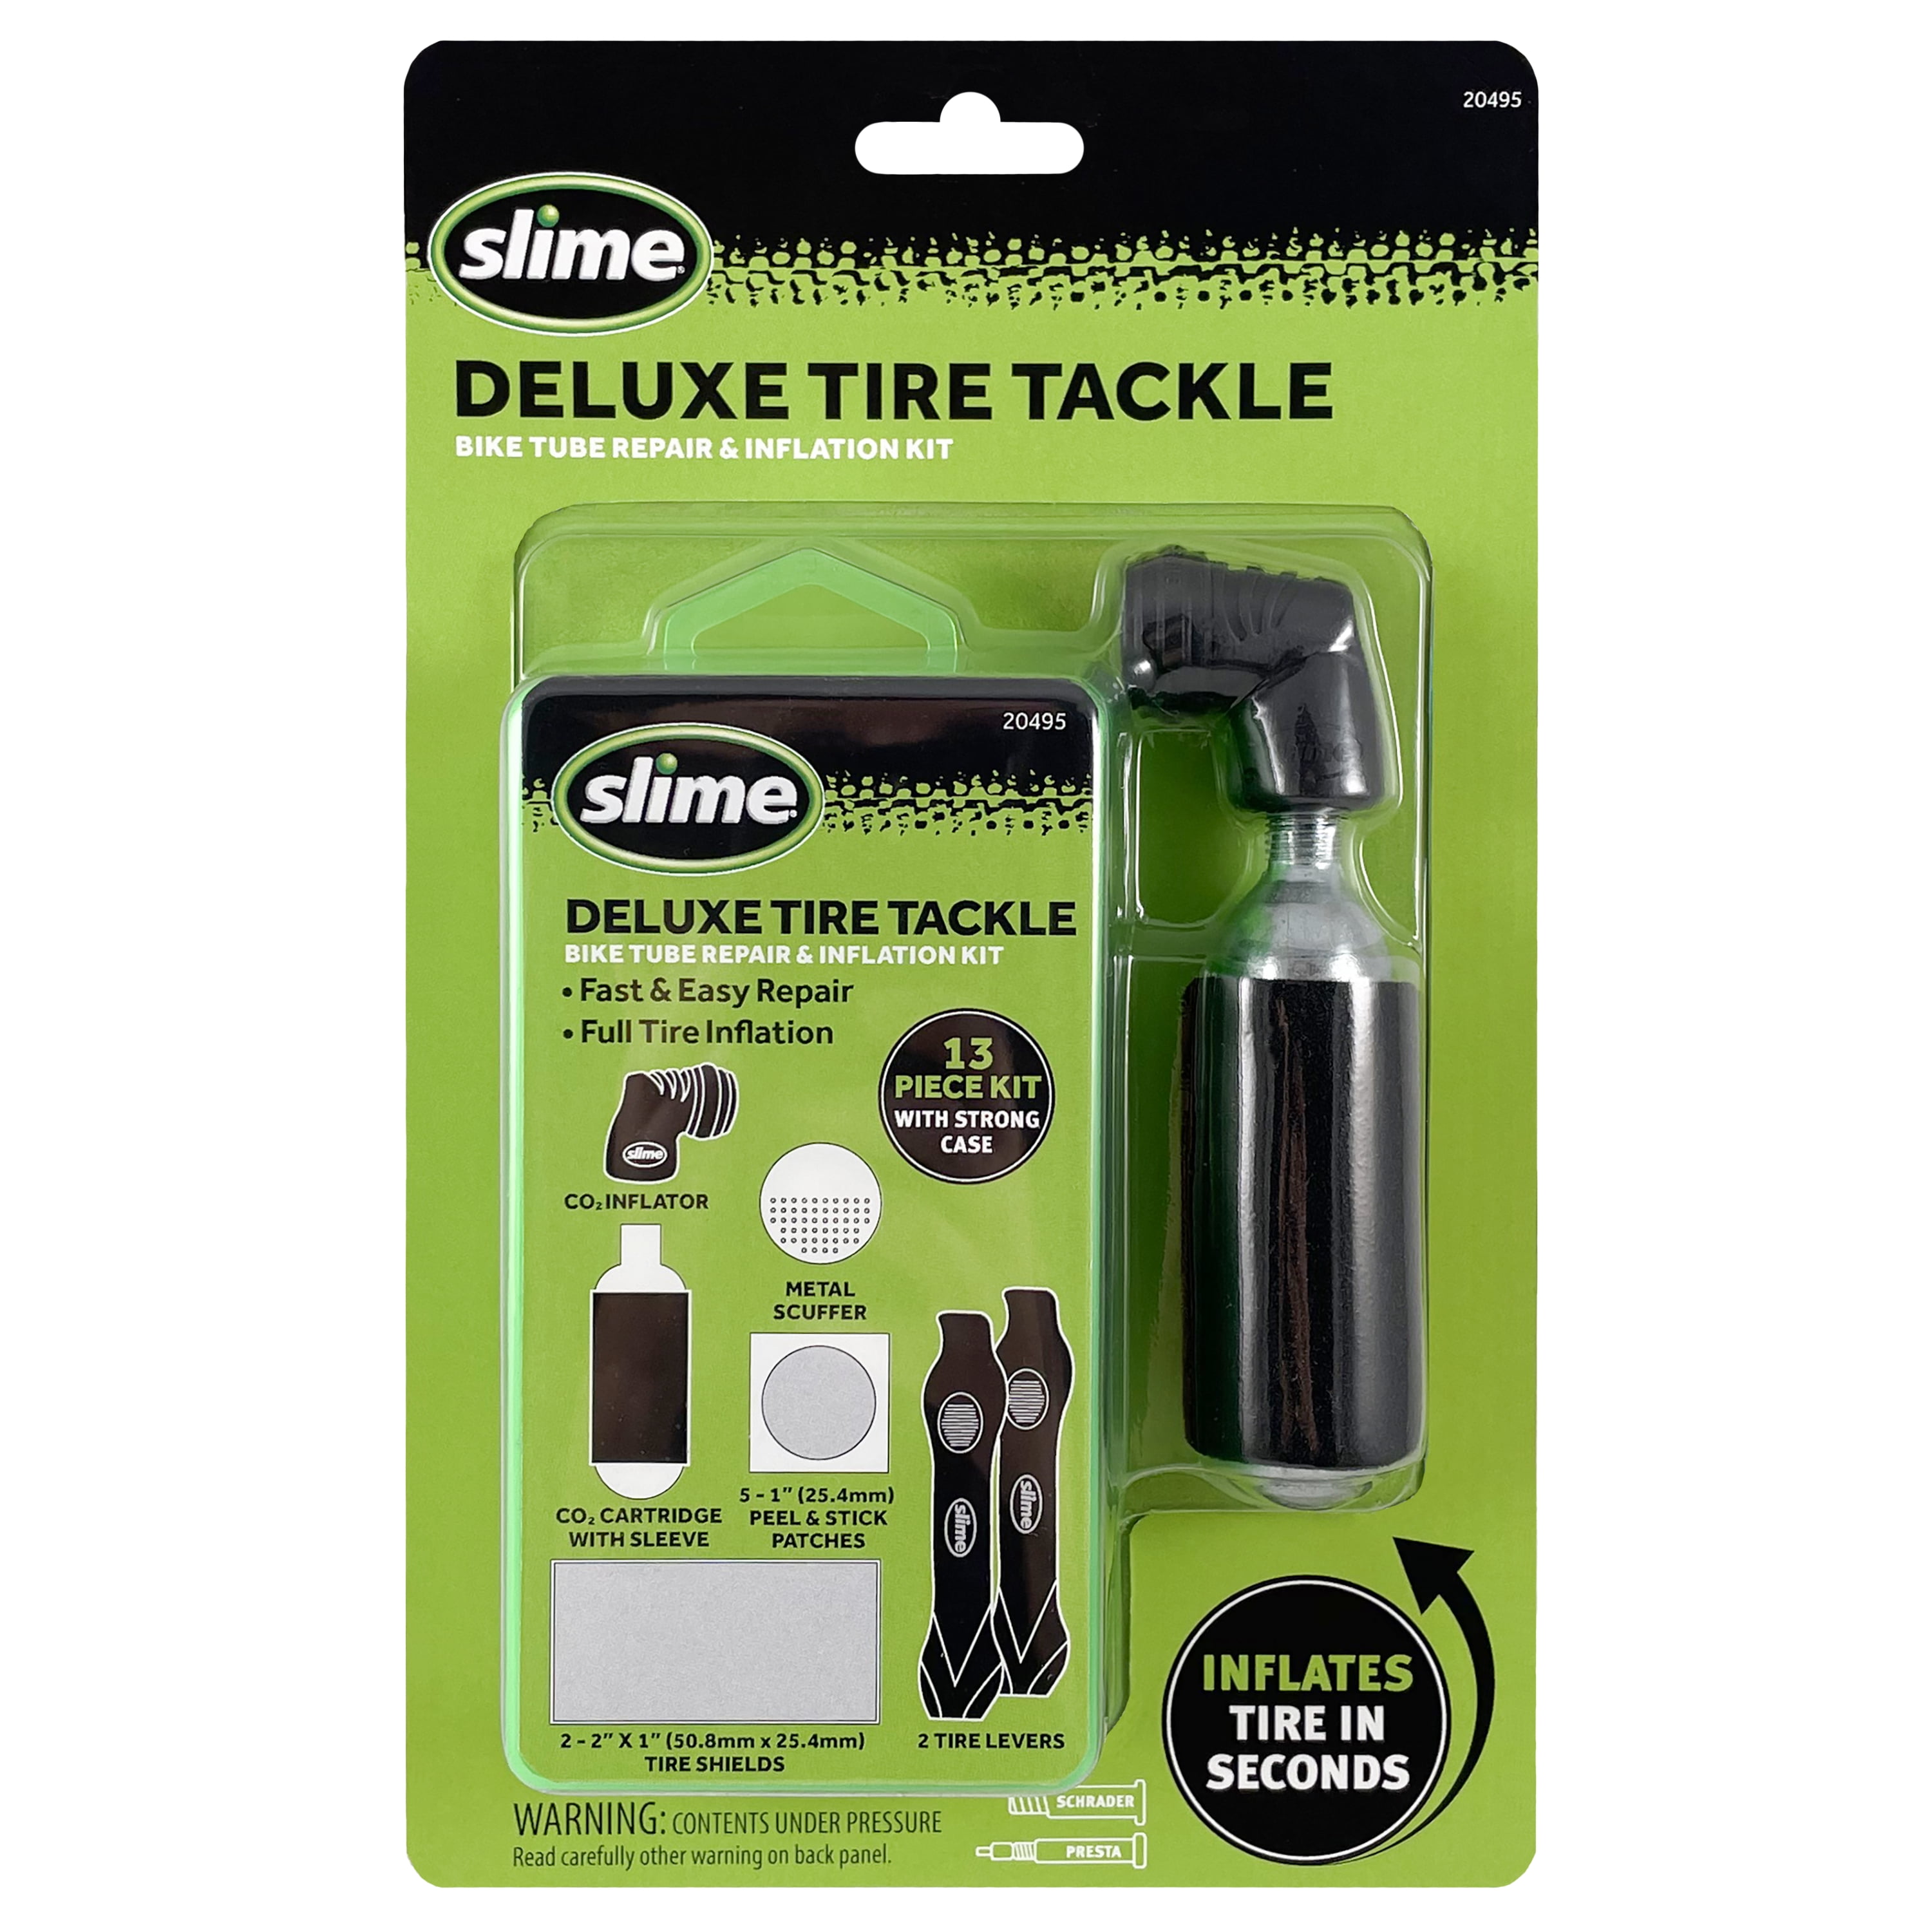 Slime Deluxe Tire Tackle Bike Tube Repair & Inflation Kit - 20495